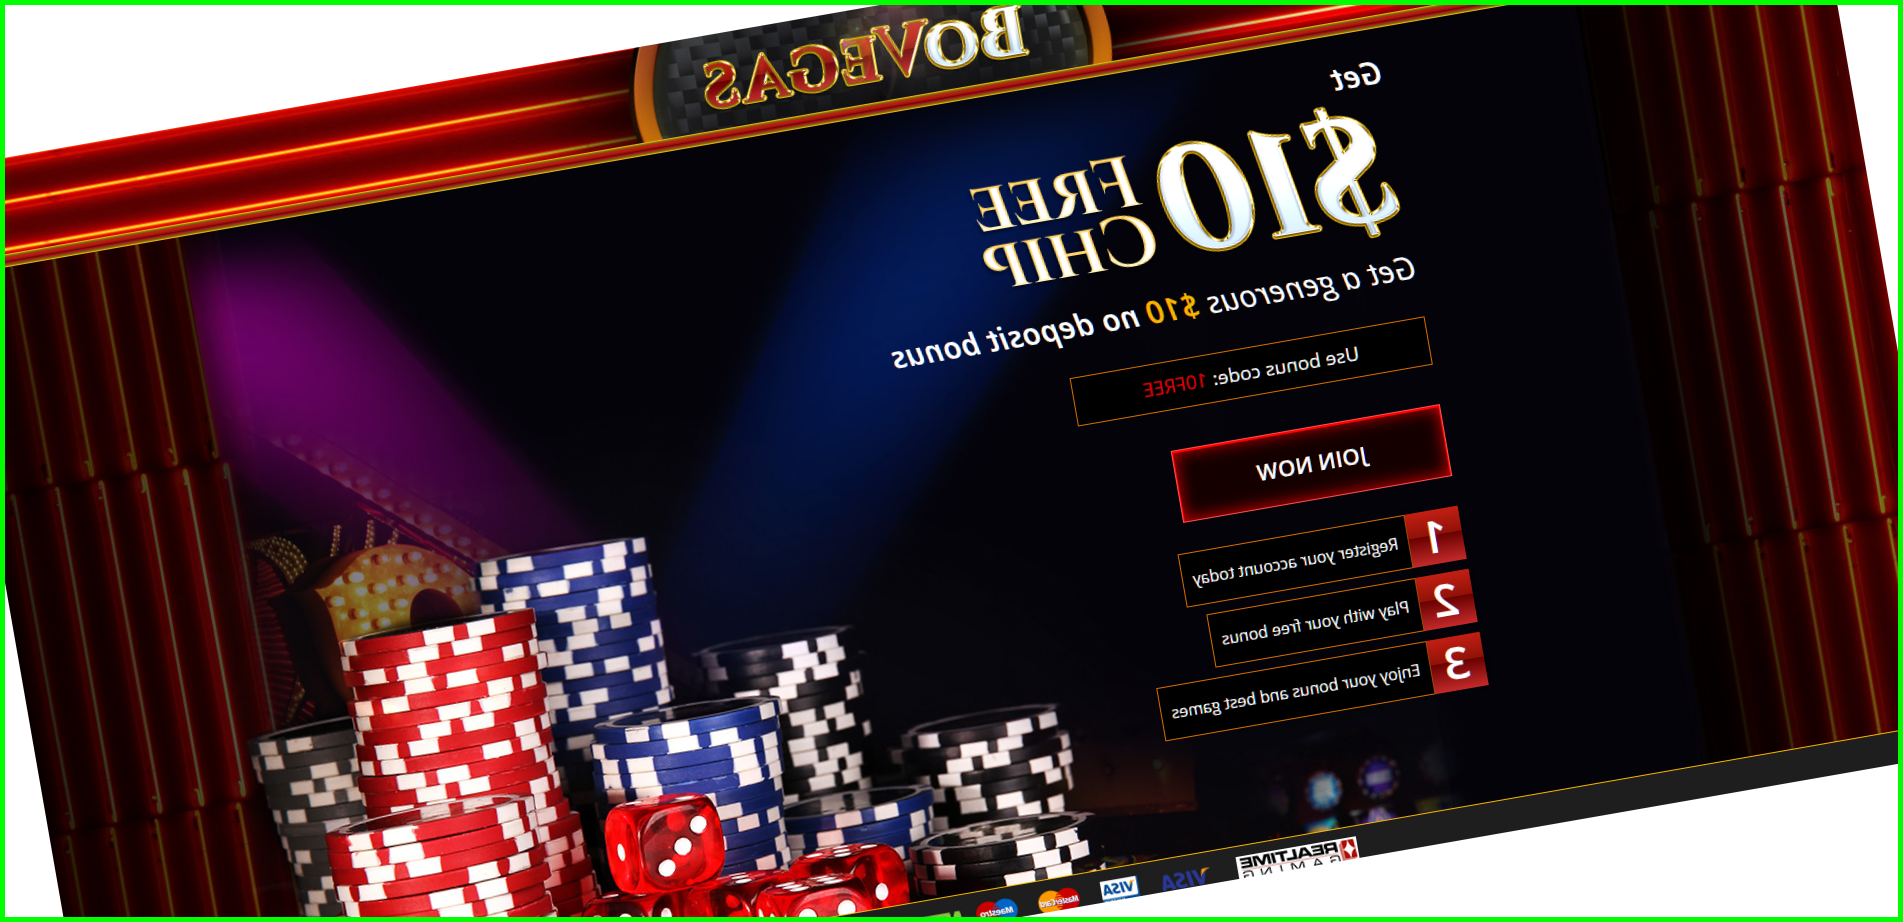 jogar casino online gratis